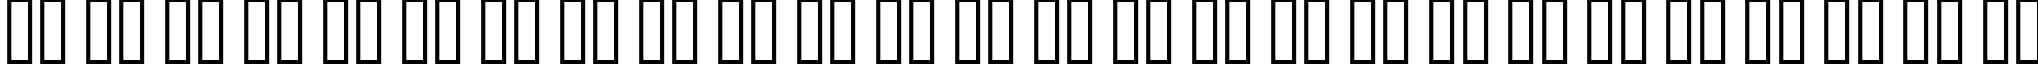 Пример написания английского алфавита шрифтом B Kidnap